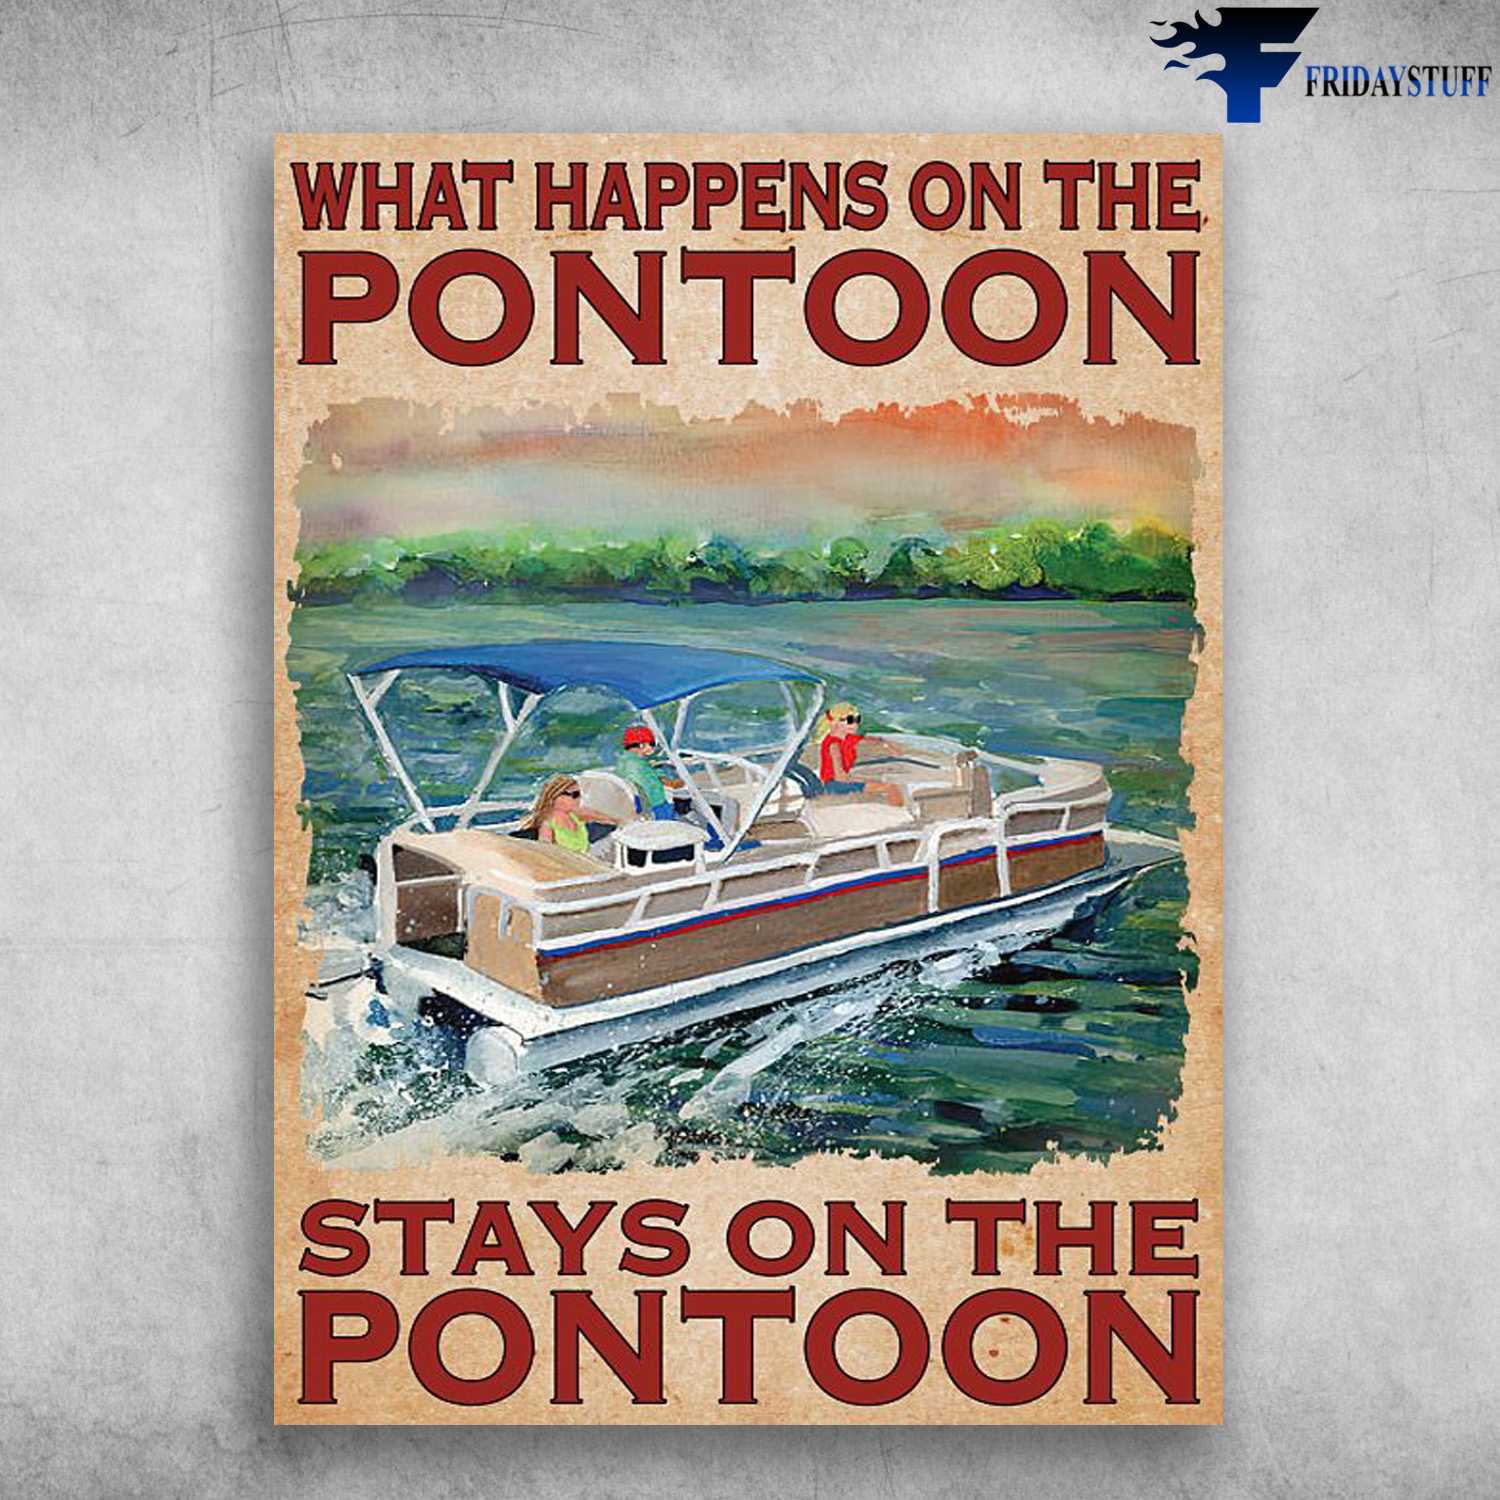 Pontoon Boat, What Happens On The Pontoon, Stays On The Pontoon